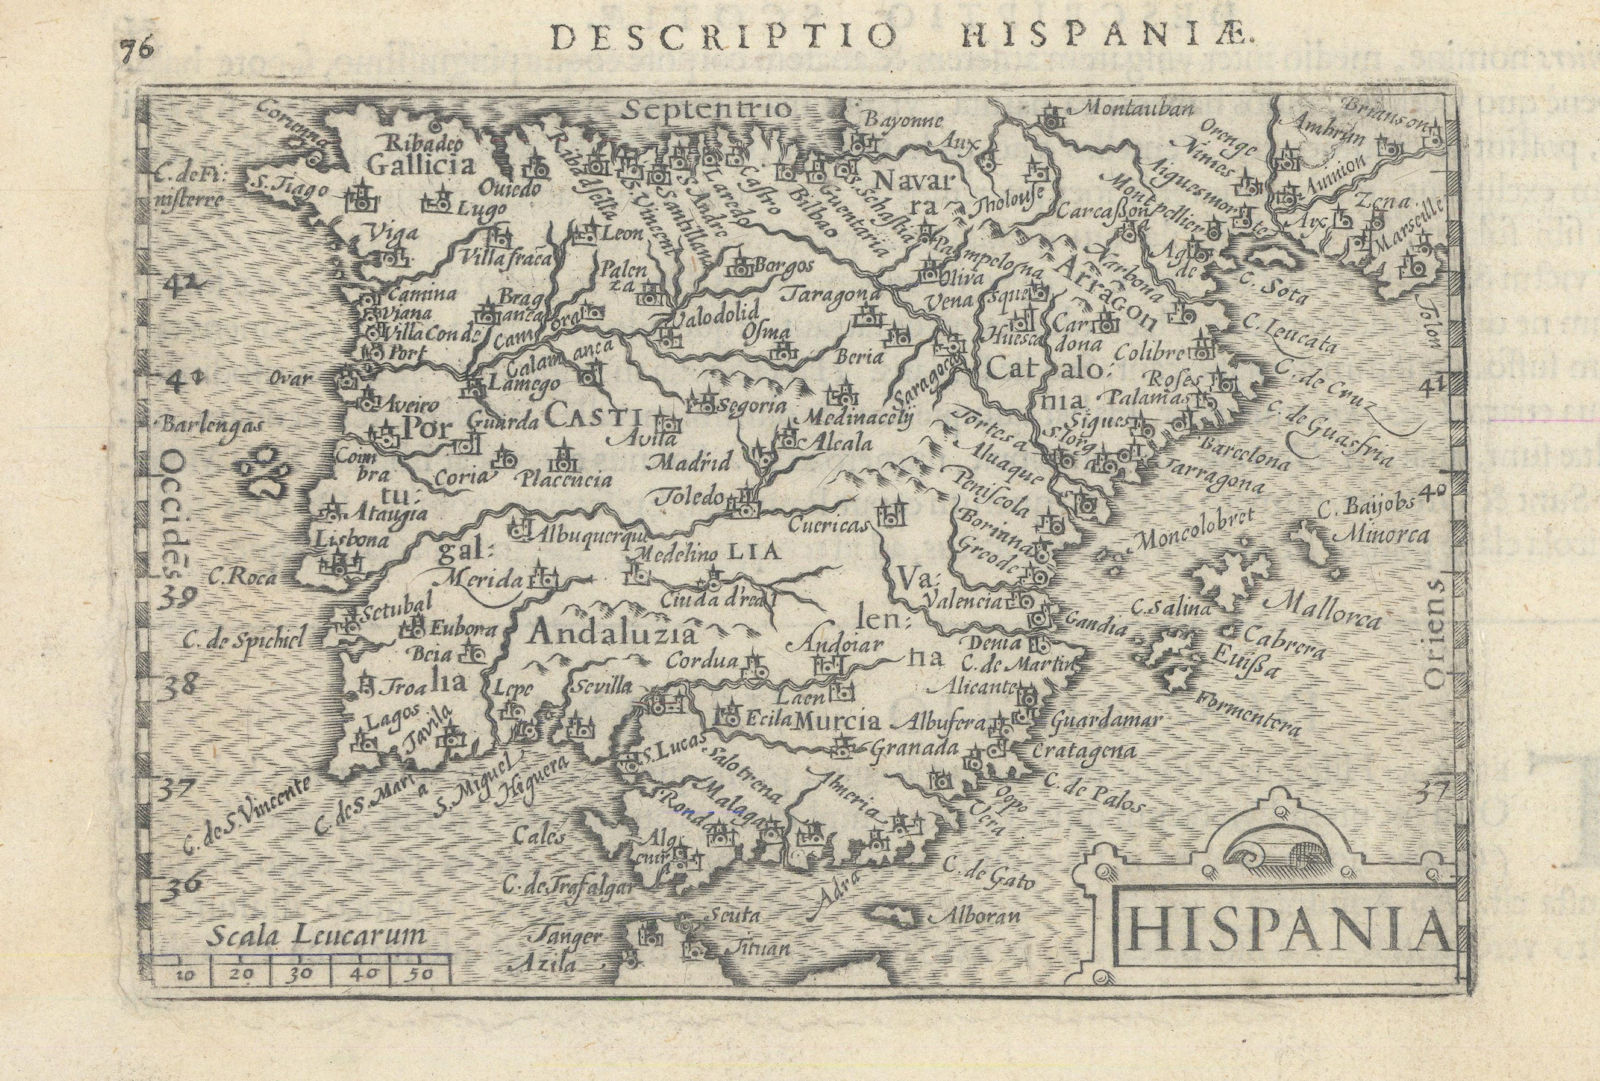 Hispaniae / Hispania by Bertius / Langenes. Iberia. Spain & Portugal 1603 map